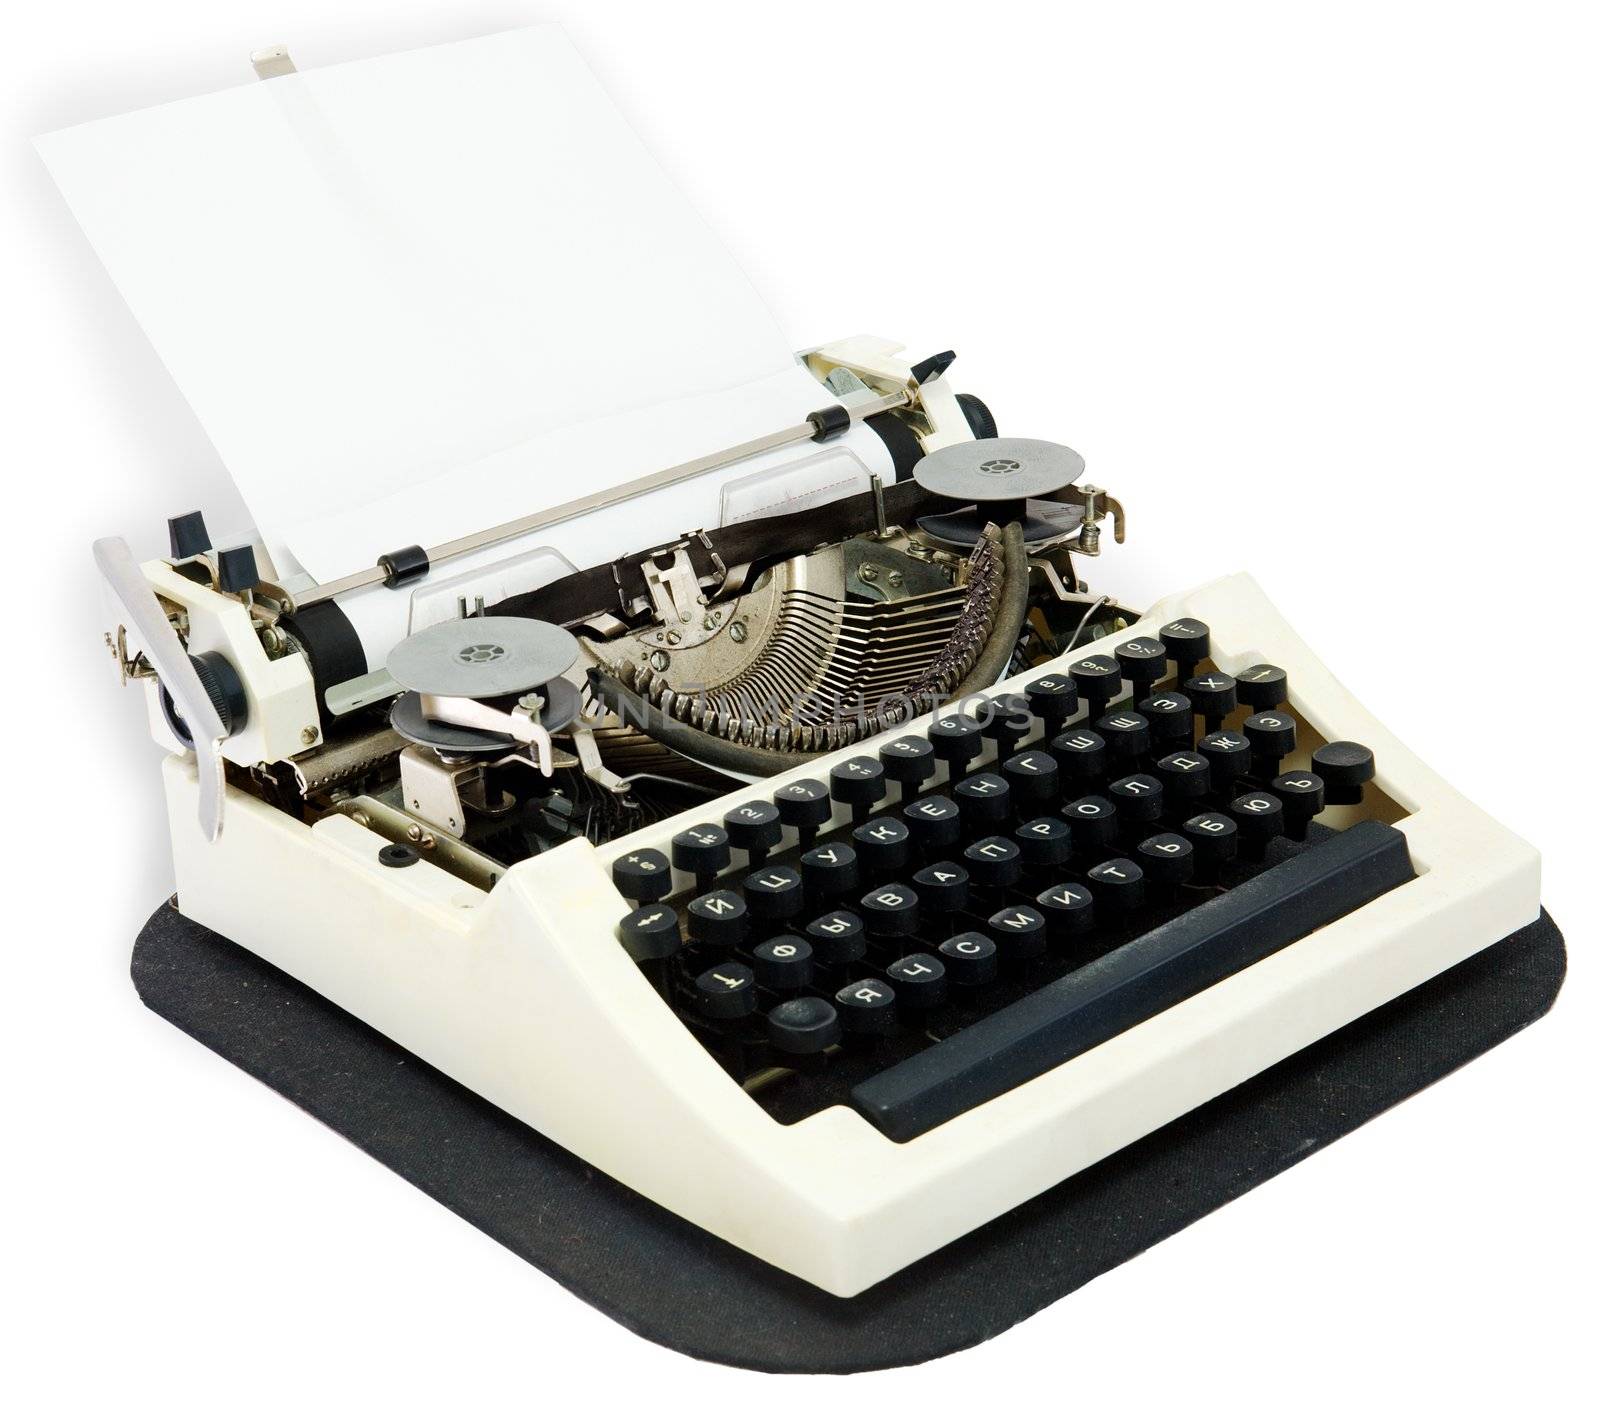 Typewriter by pzaxe